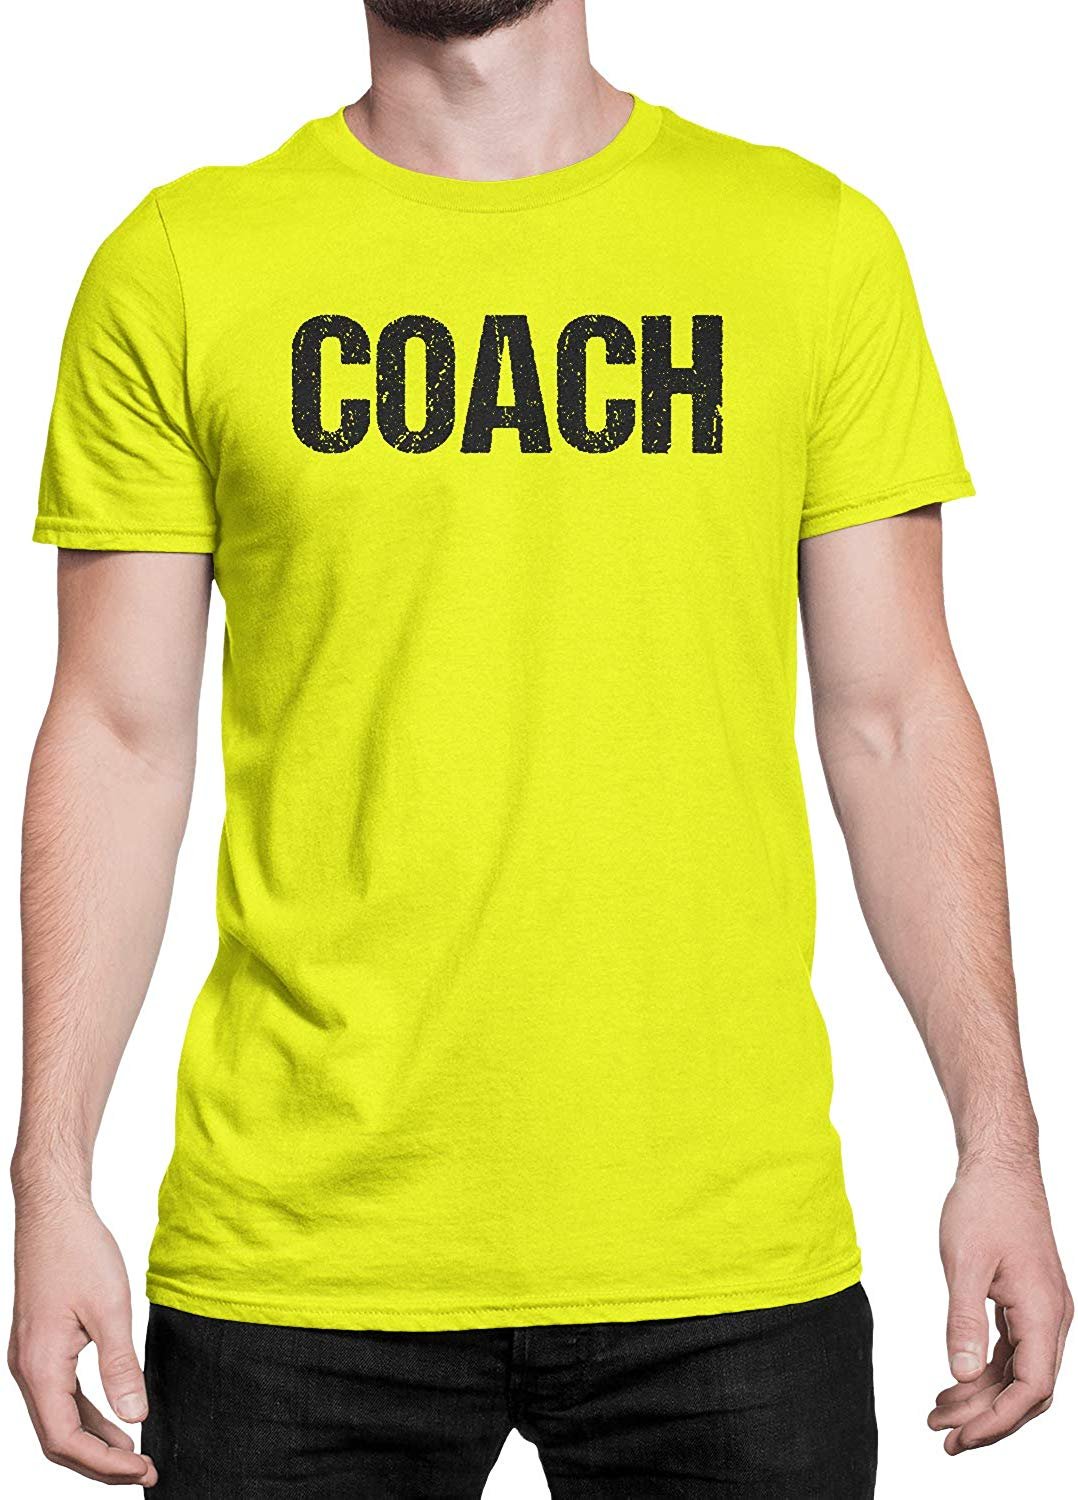 Coach T-Shirt Sports Coaching Tee Shirt (Neon & Black, Distressed)